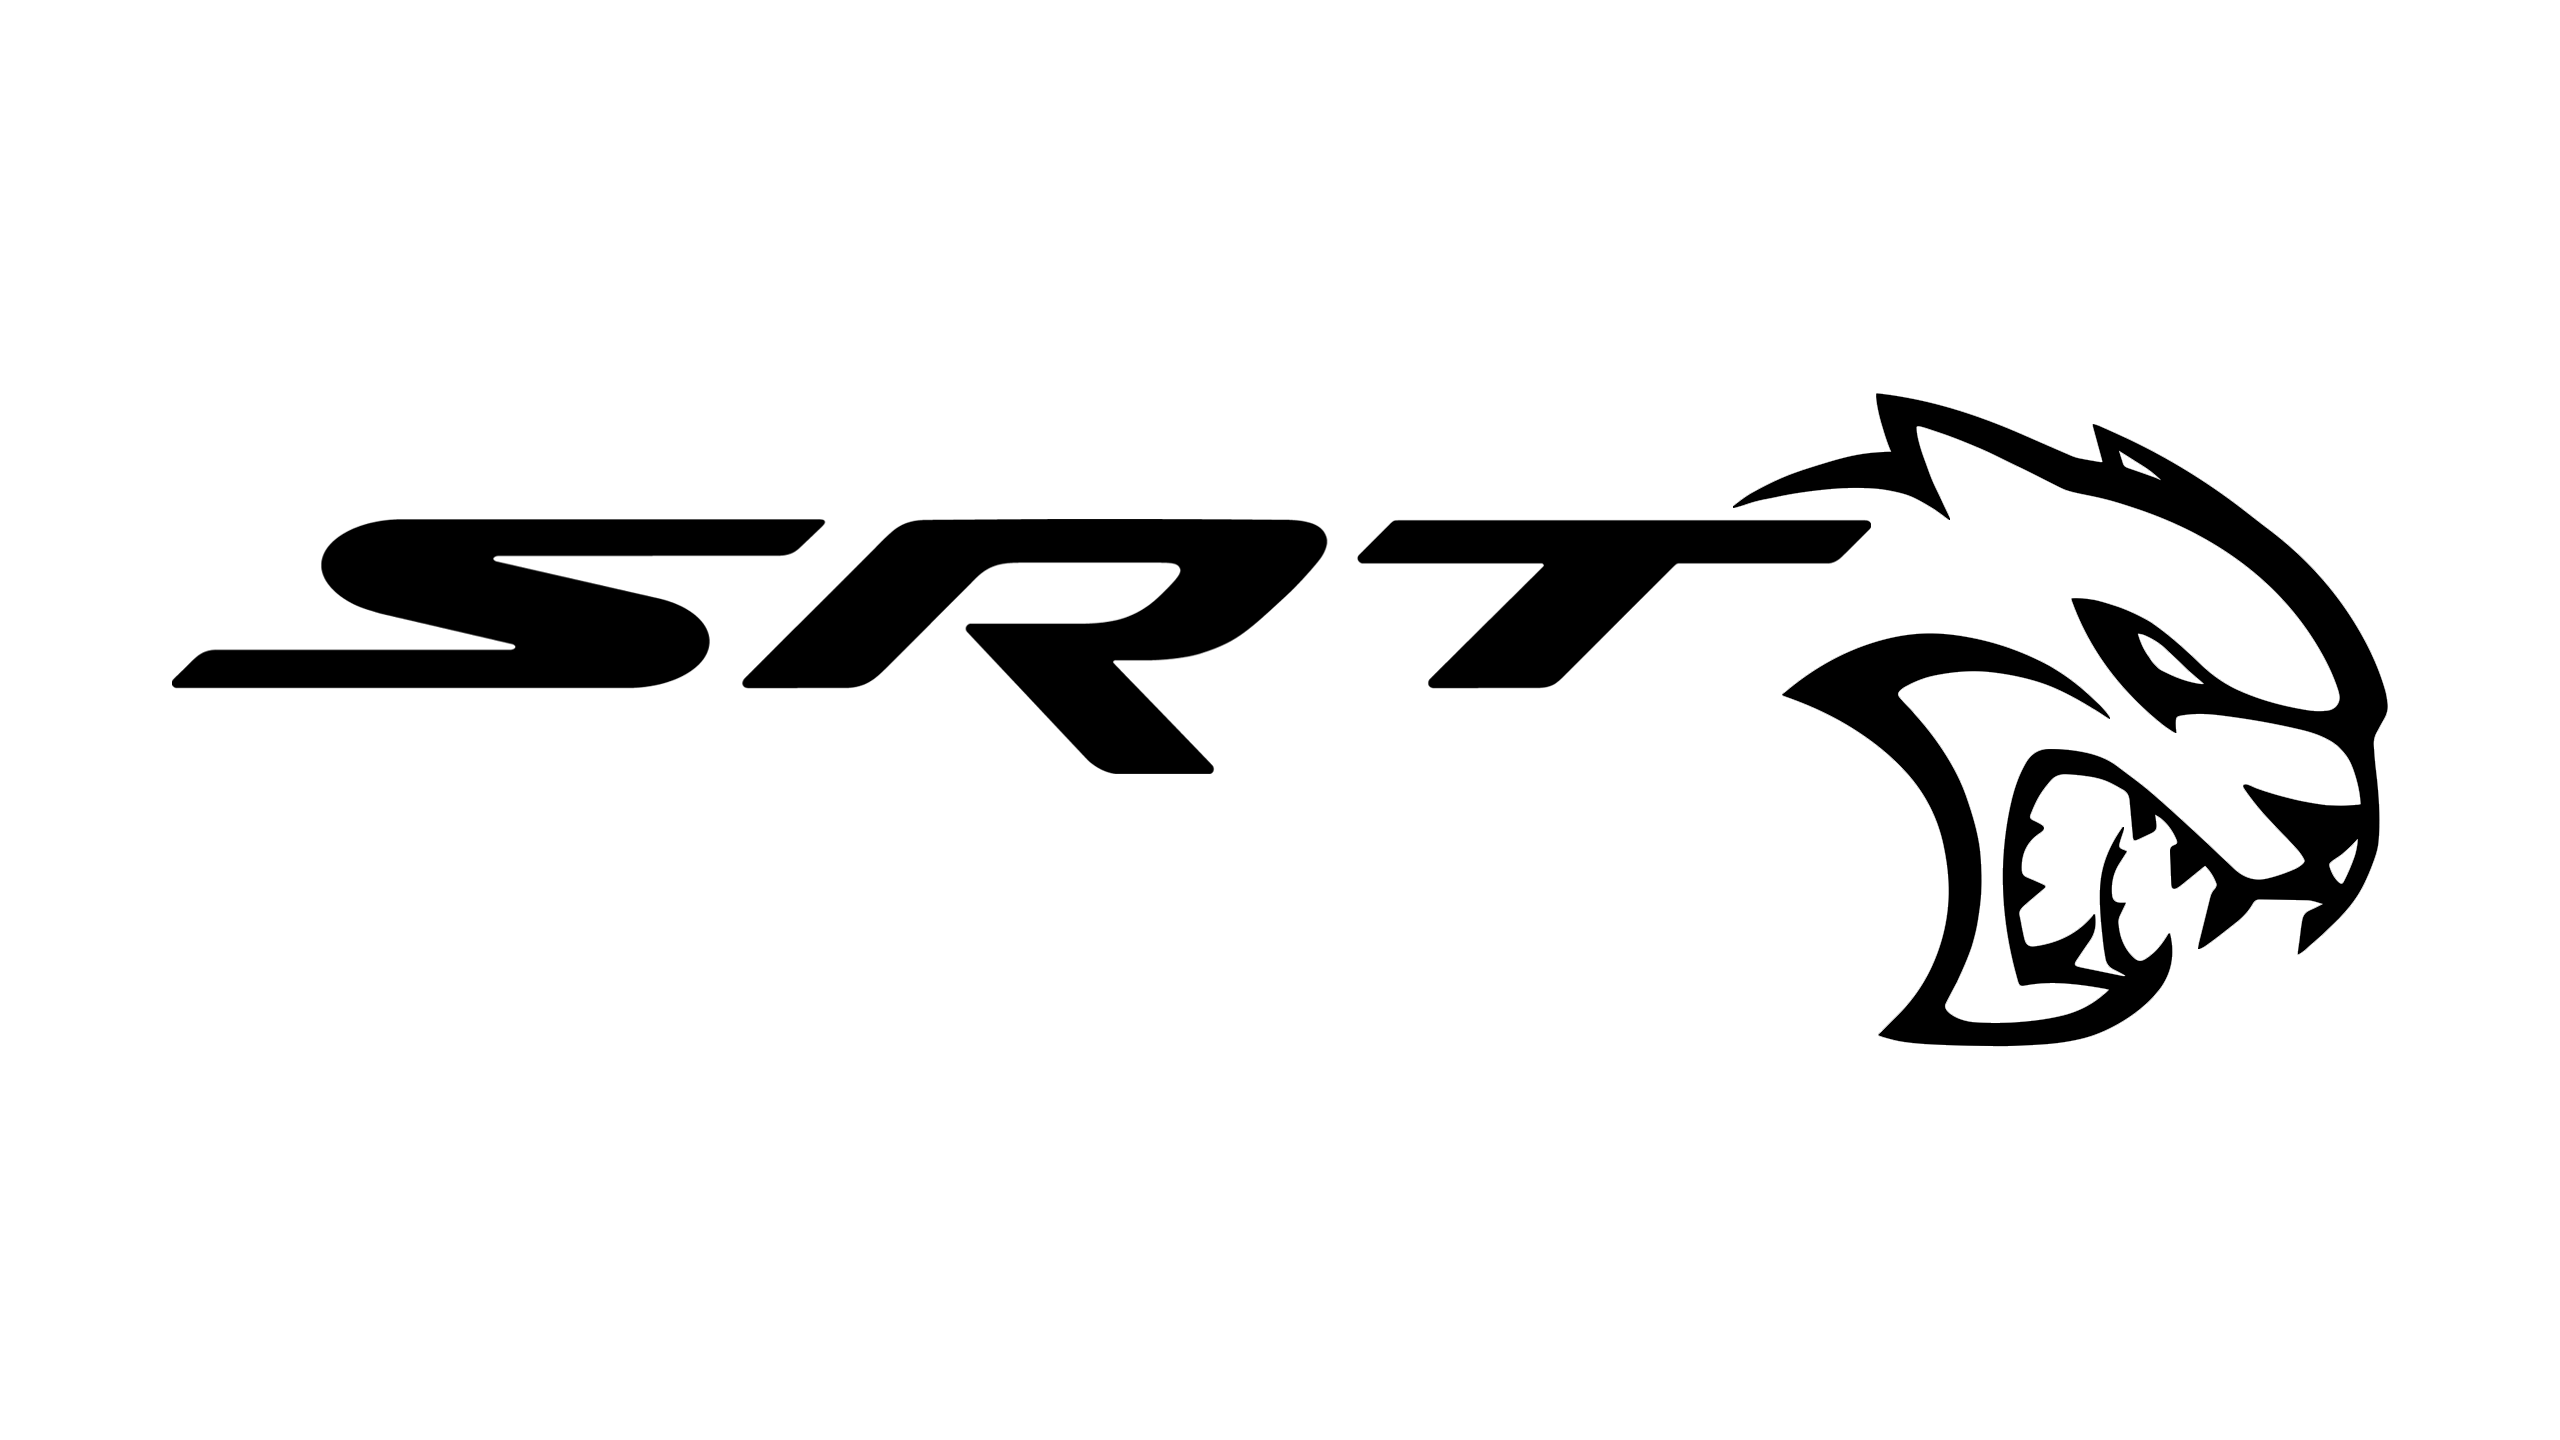 SRT Hellcat Logo 2560x1440.png (2560×1440). Logo Image, Srt Hellcat, Hellcat